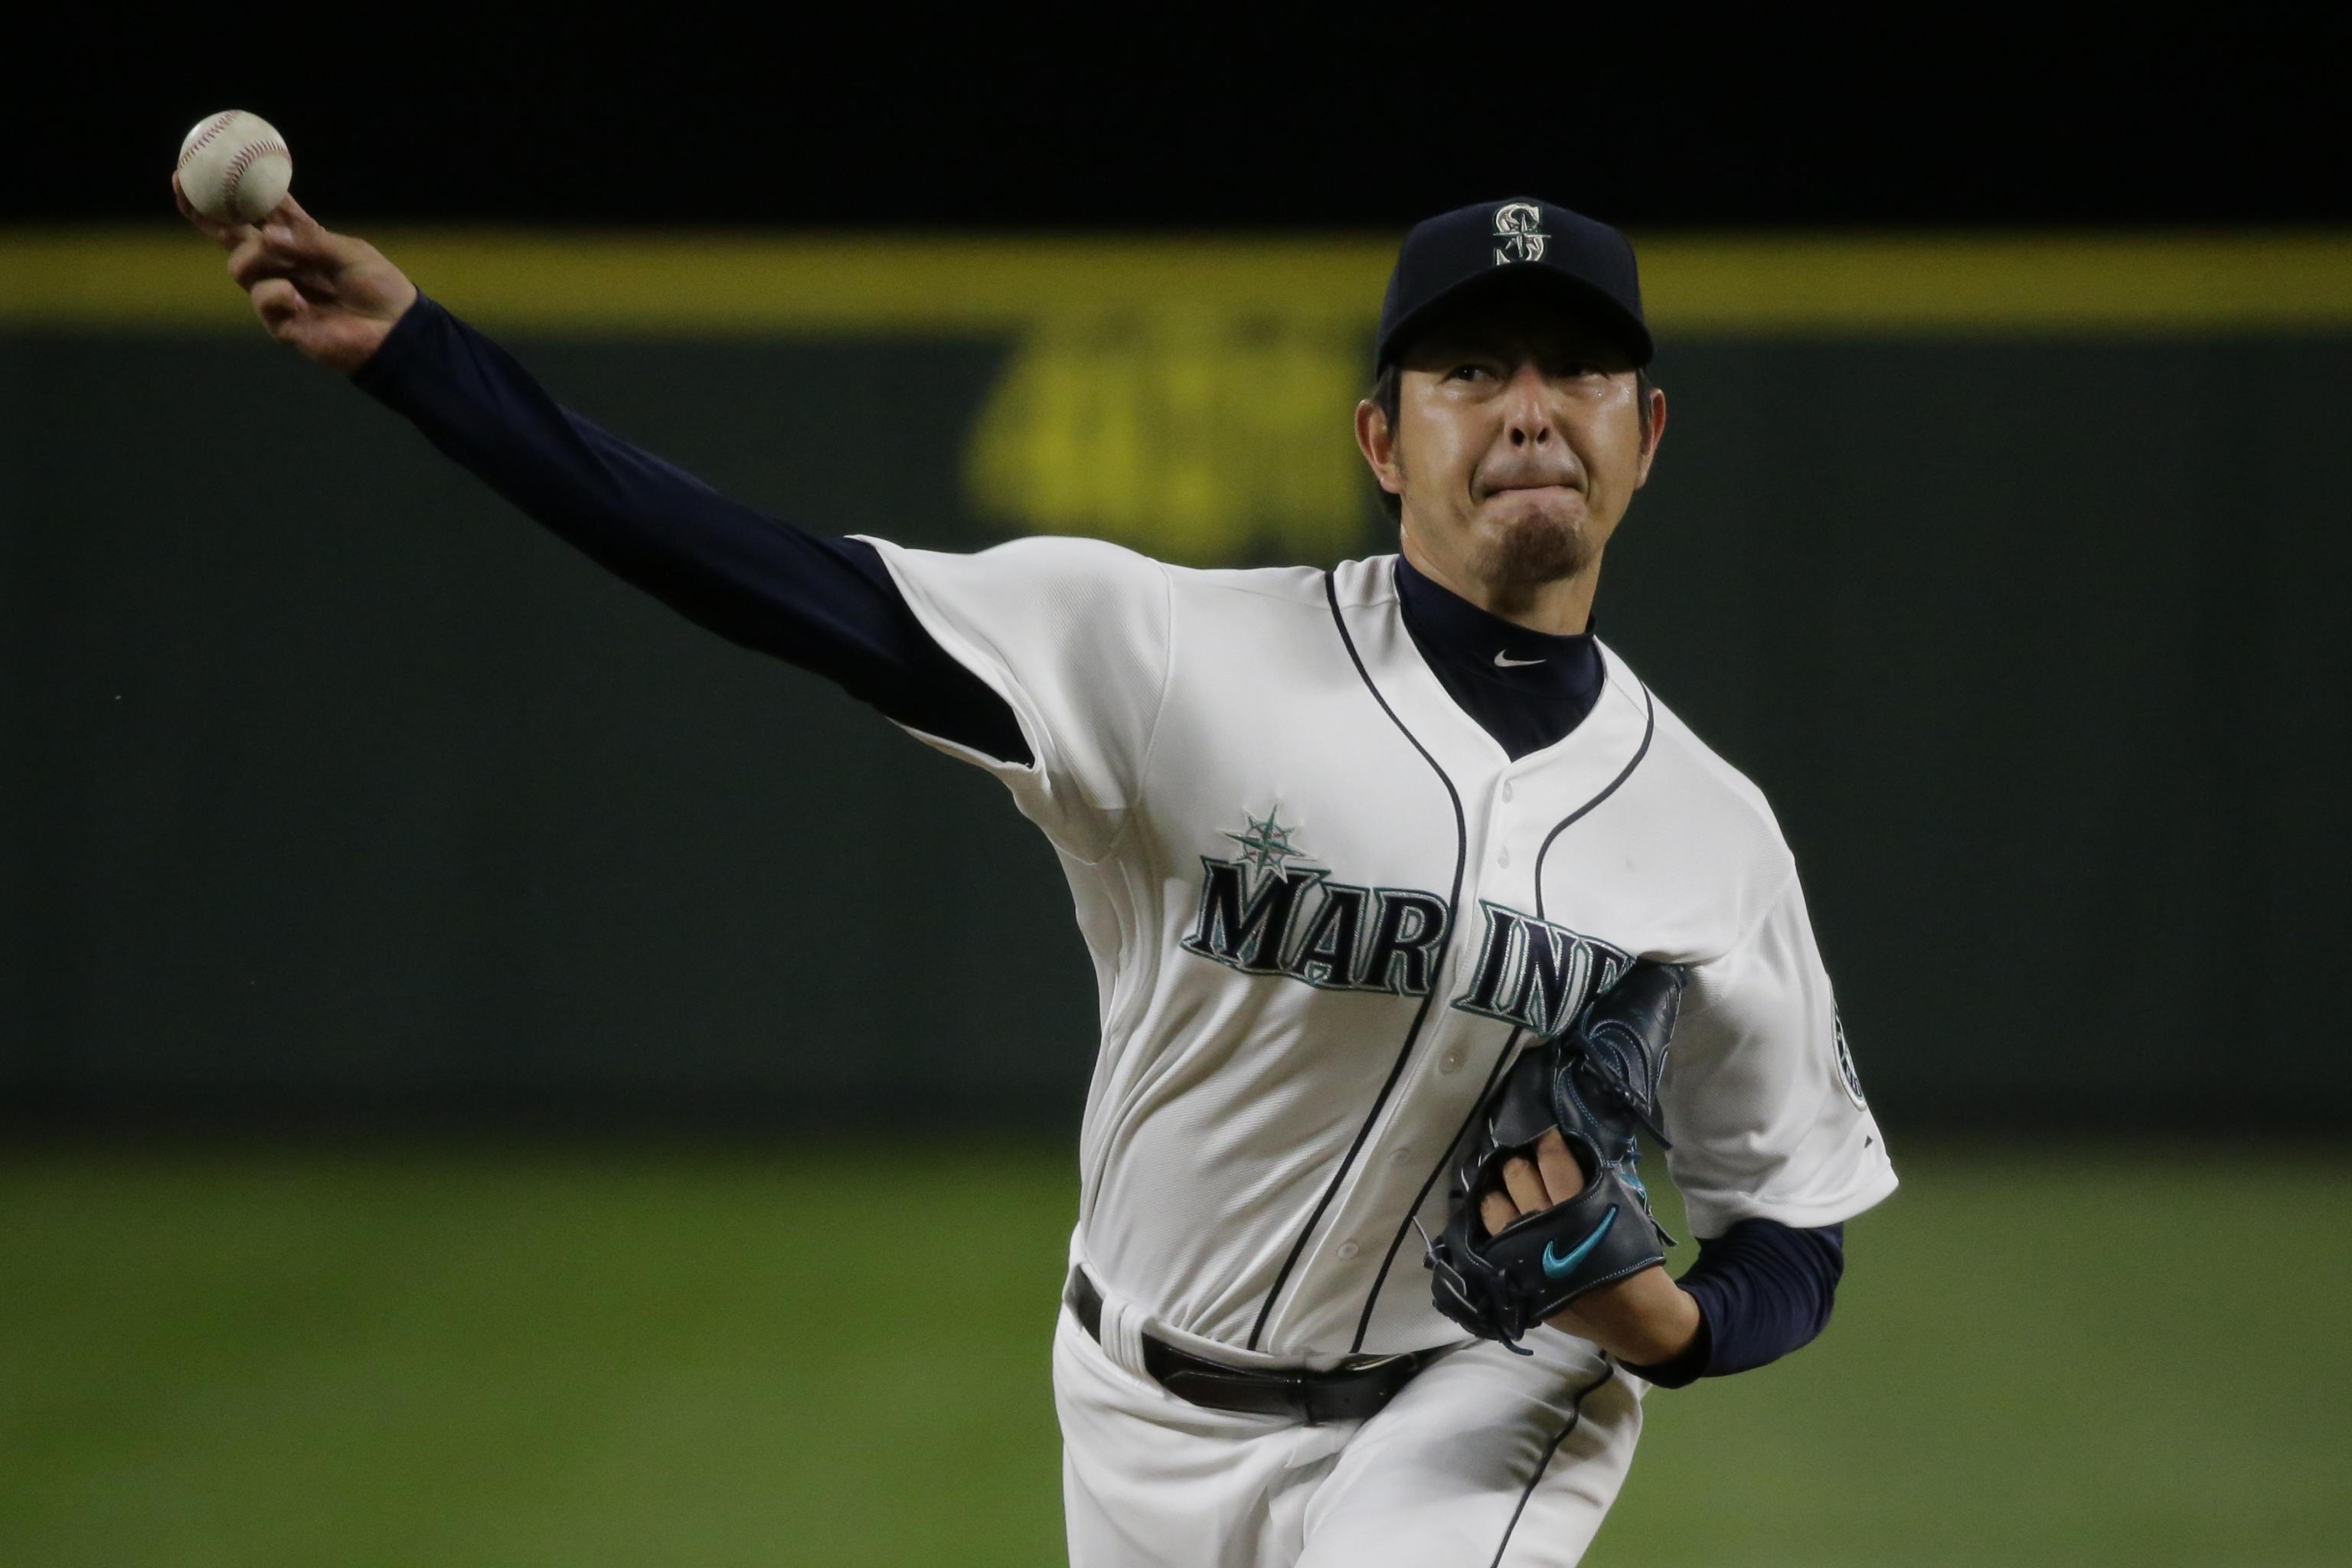 Starting pitcher Hisashi Iwakuma of the Seattle Mariners pitches